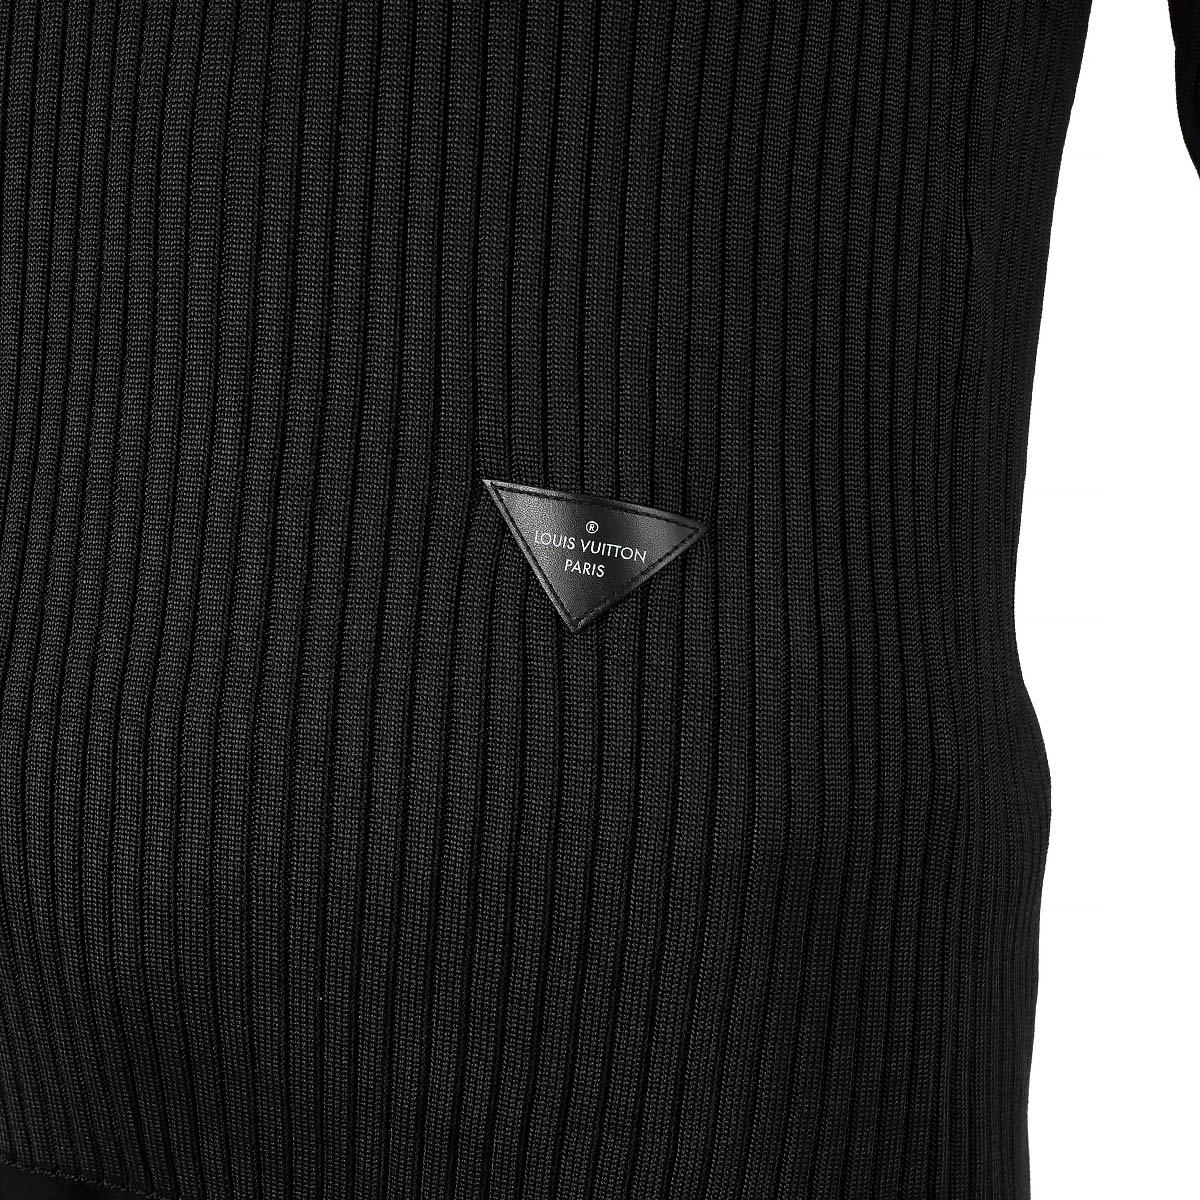 LOUIS VUITTON black silk 2017 RIB-KNIT TURTLENECK Sweater M For Sale 1